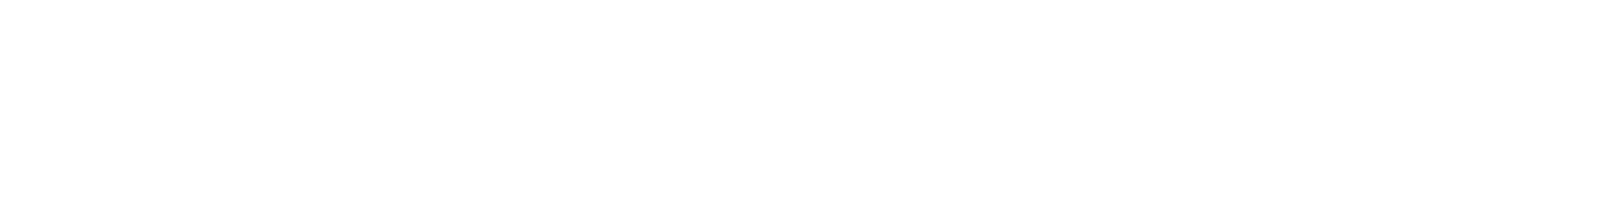 Burberry logo large for dark backgrounds (transparent PNG)